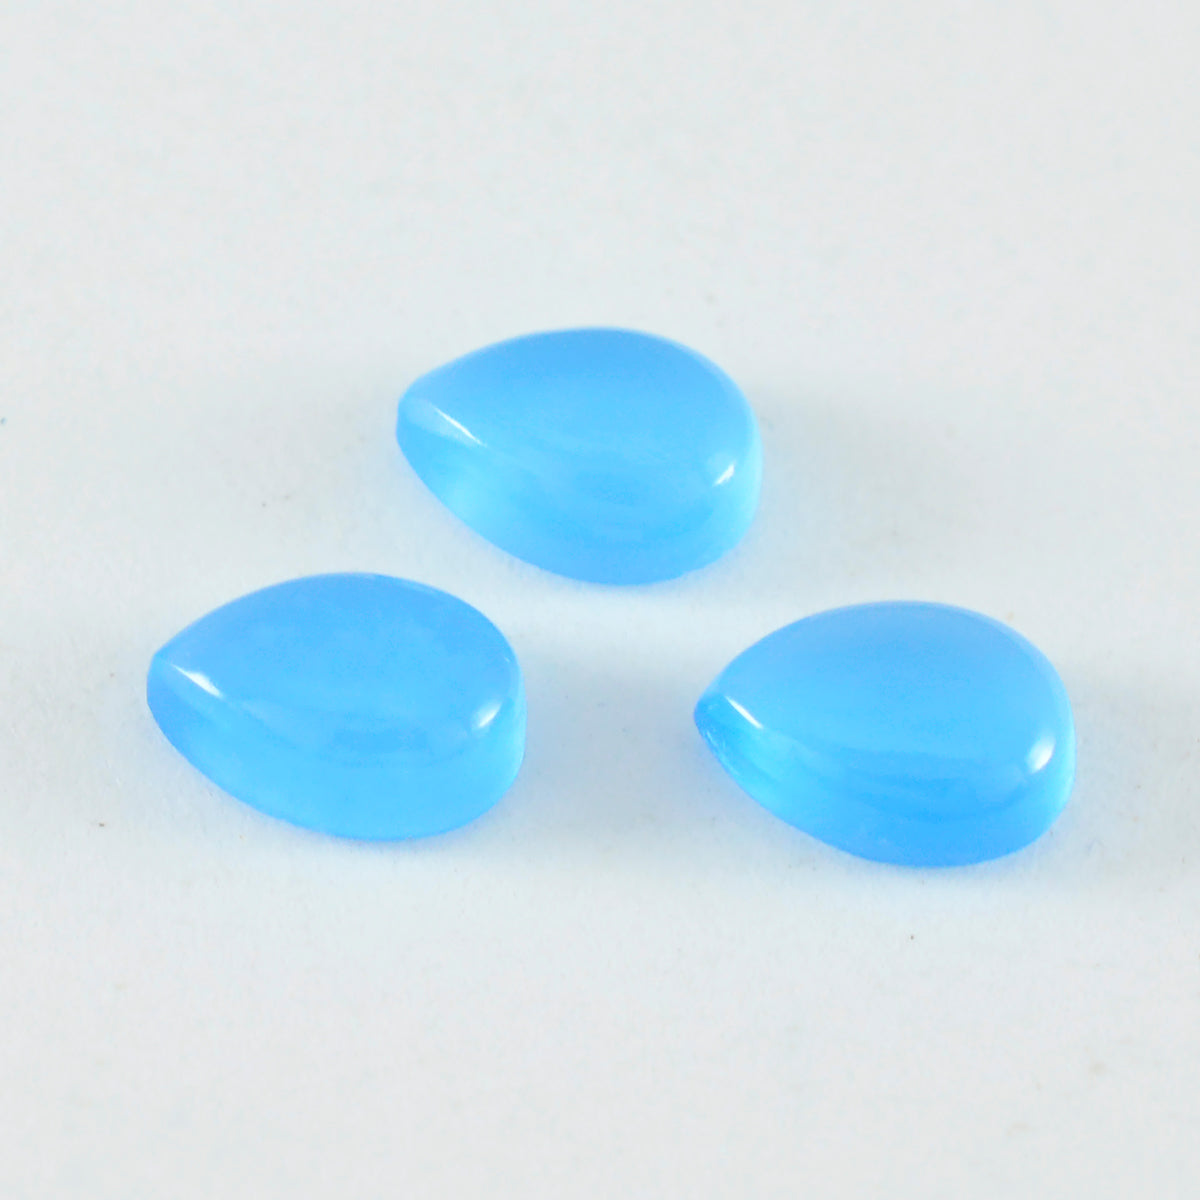 riyogems 1шт кабошон из синего халцедона 7х10 мм грушевидной формы А+ качество рассыпчатый камень